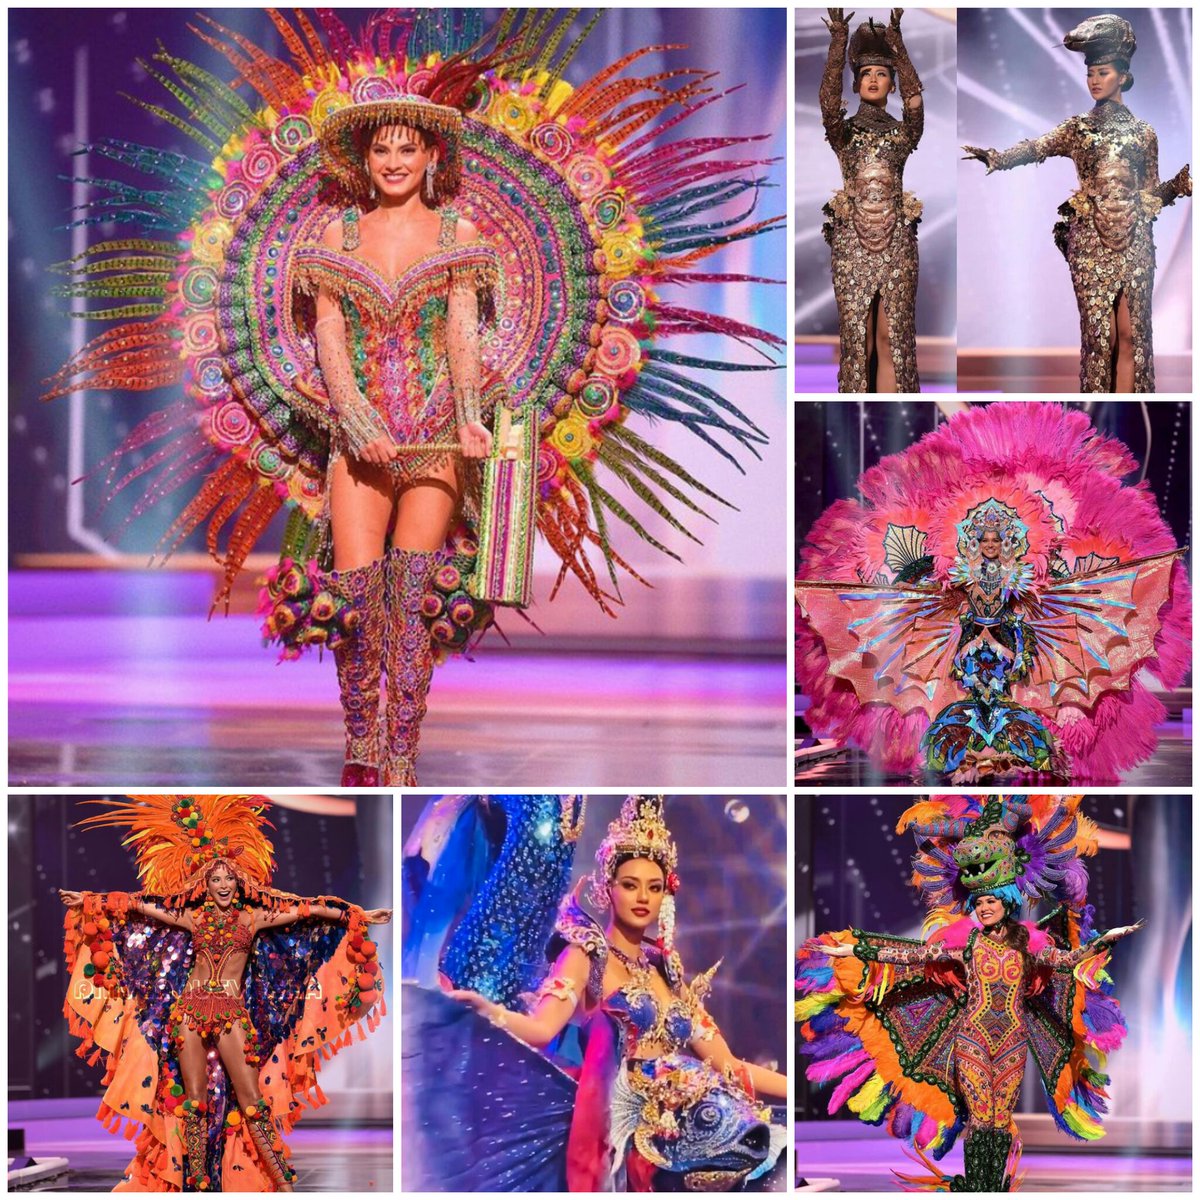 My favorites National Costume
#MissUniverse #MissUniverse2021 
1- #MissNicaragua  🌟🌟🌟
2- #MissThailand  🌟🌟🌟
3- #MissMexico  🌟🌟
4- #missDenmark  🌟🌟
5- #missindonesia 🌟
6- #MissColombia  🌟